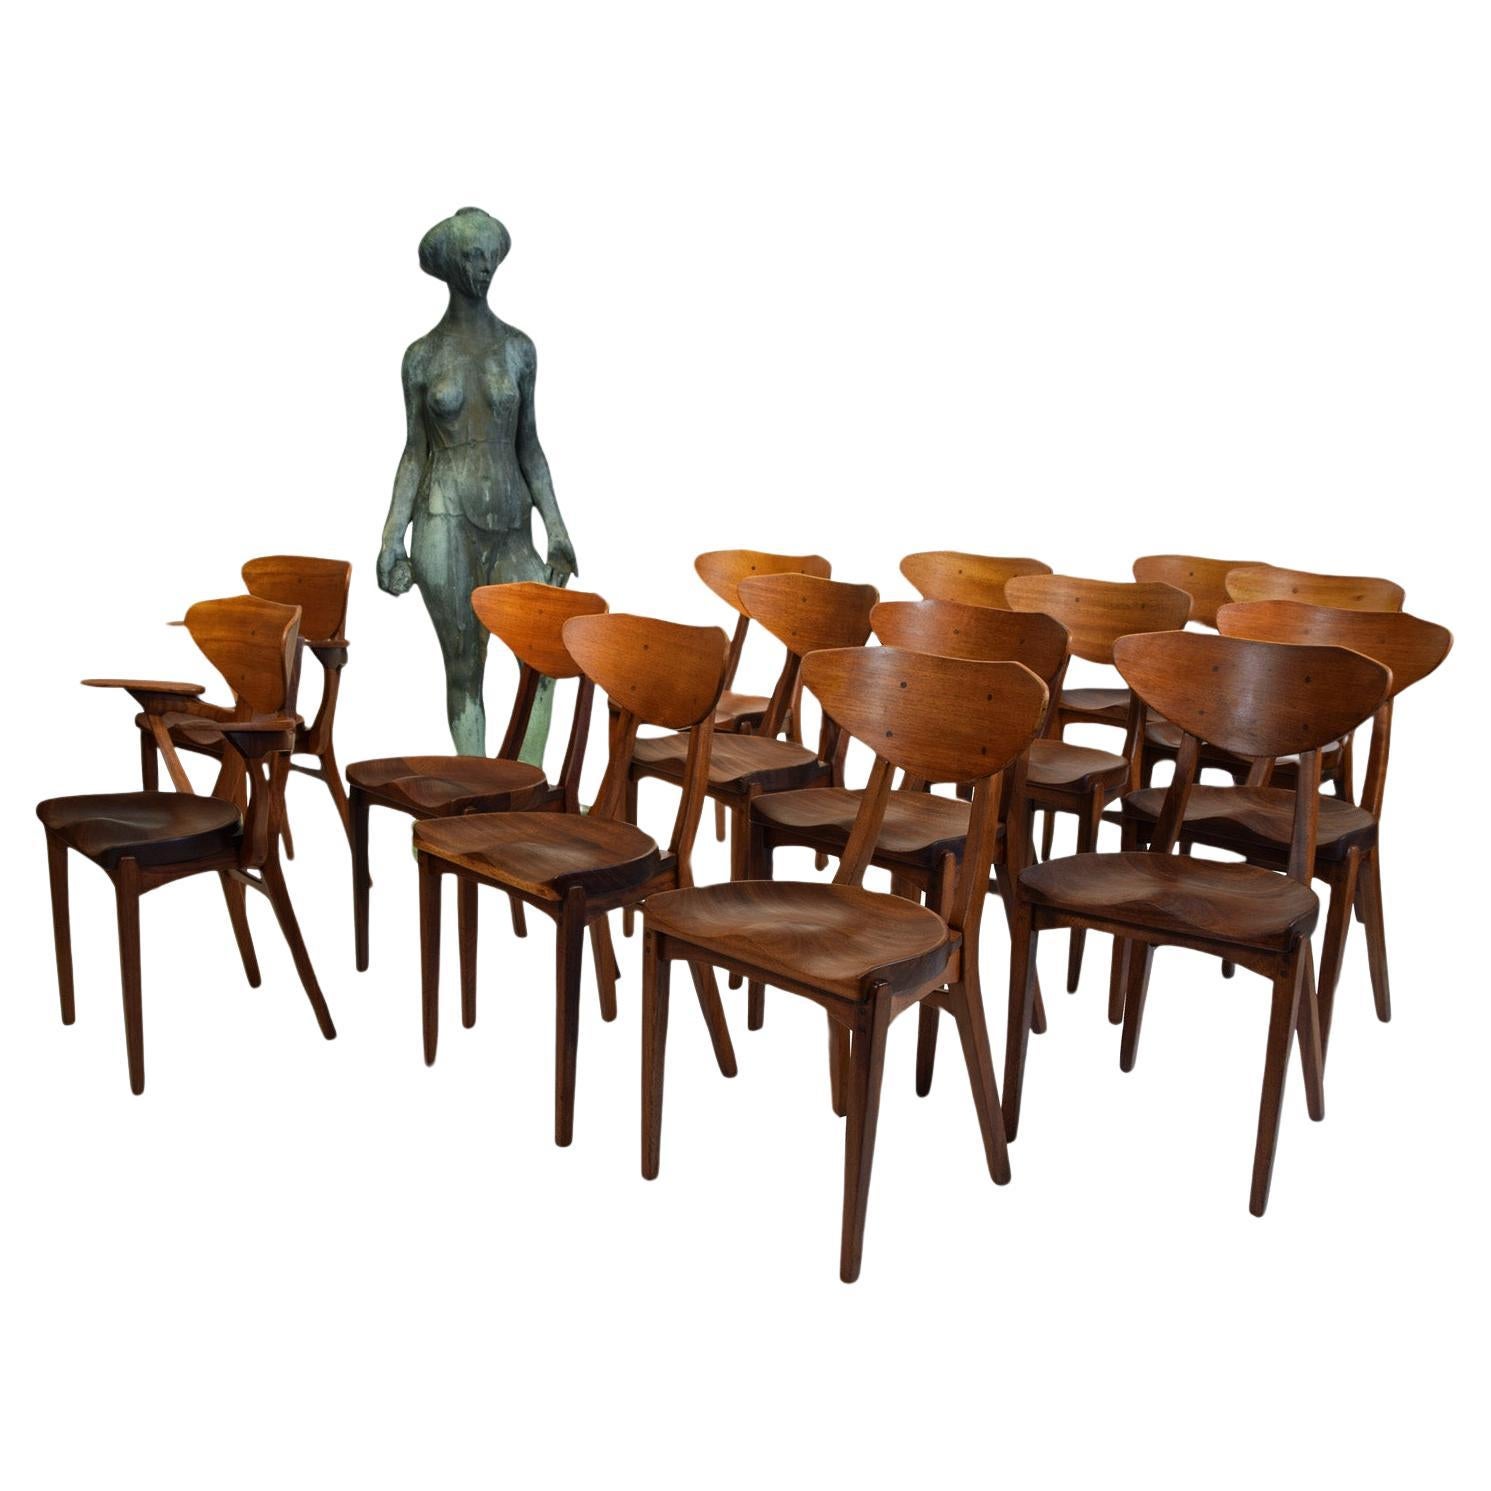 Set of 14 Solid Teak Dining Chairs by Richard Jensen & Kjærulff Rasmussen 1950's For Sale